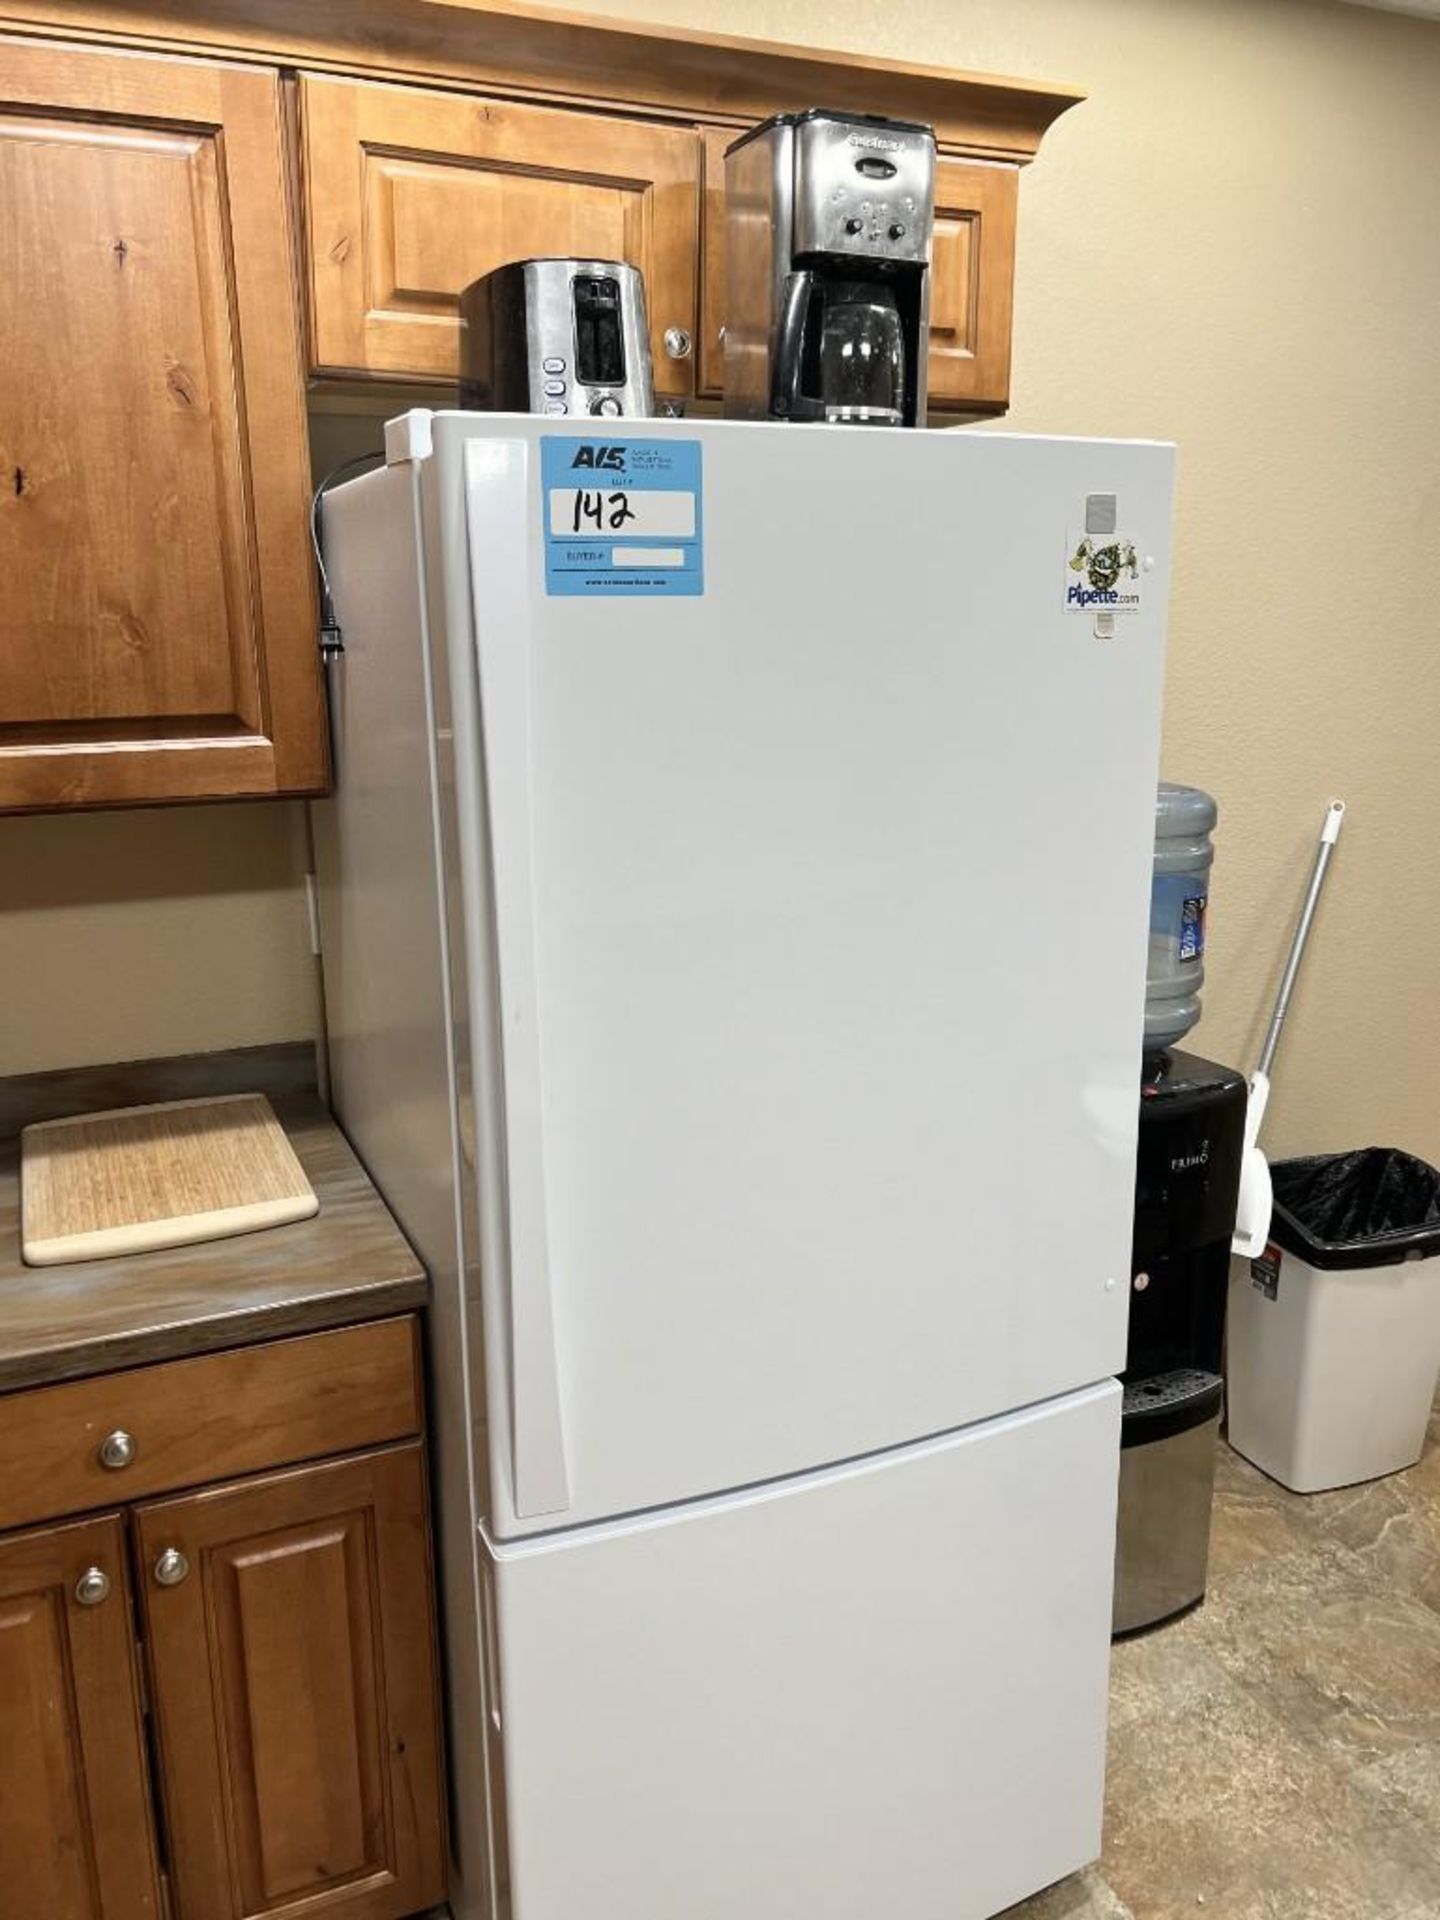 Lot Consisting Of: (1) Kenmore refrigerator-freezer, model 795.78022.310, toaster, coffee maker, Pri